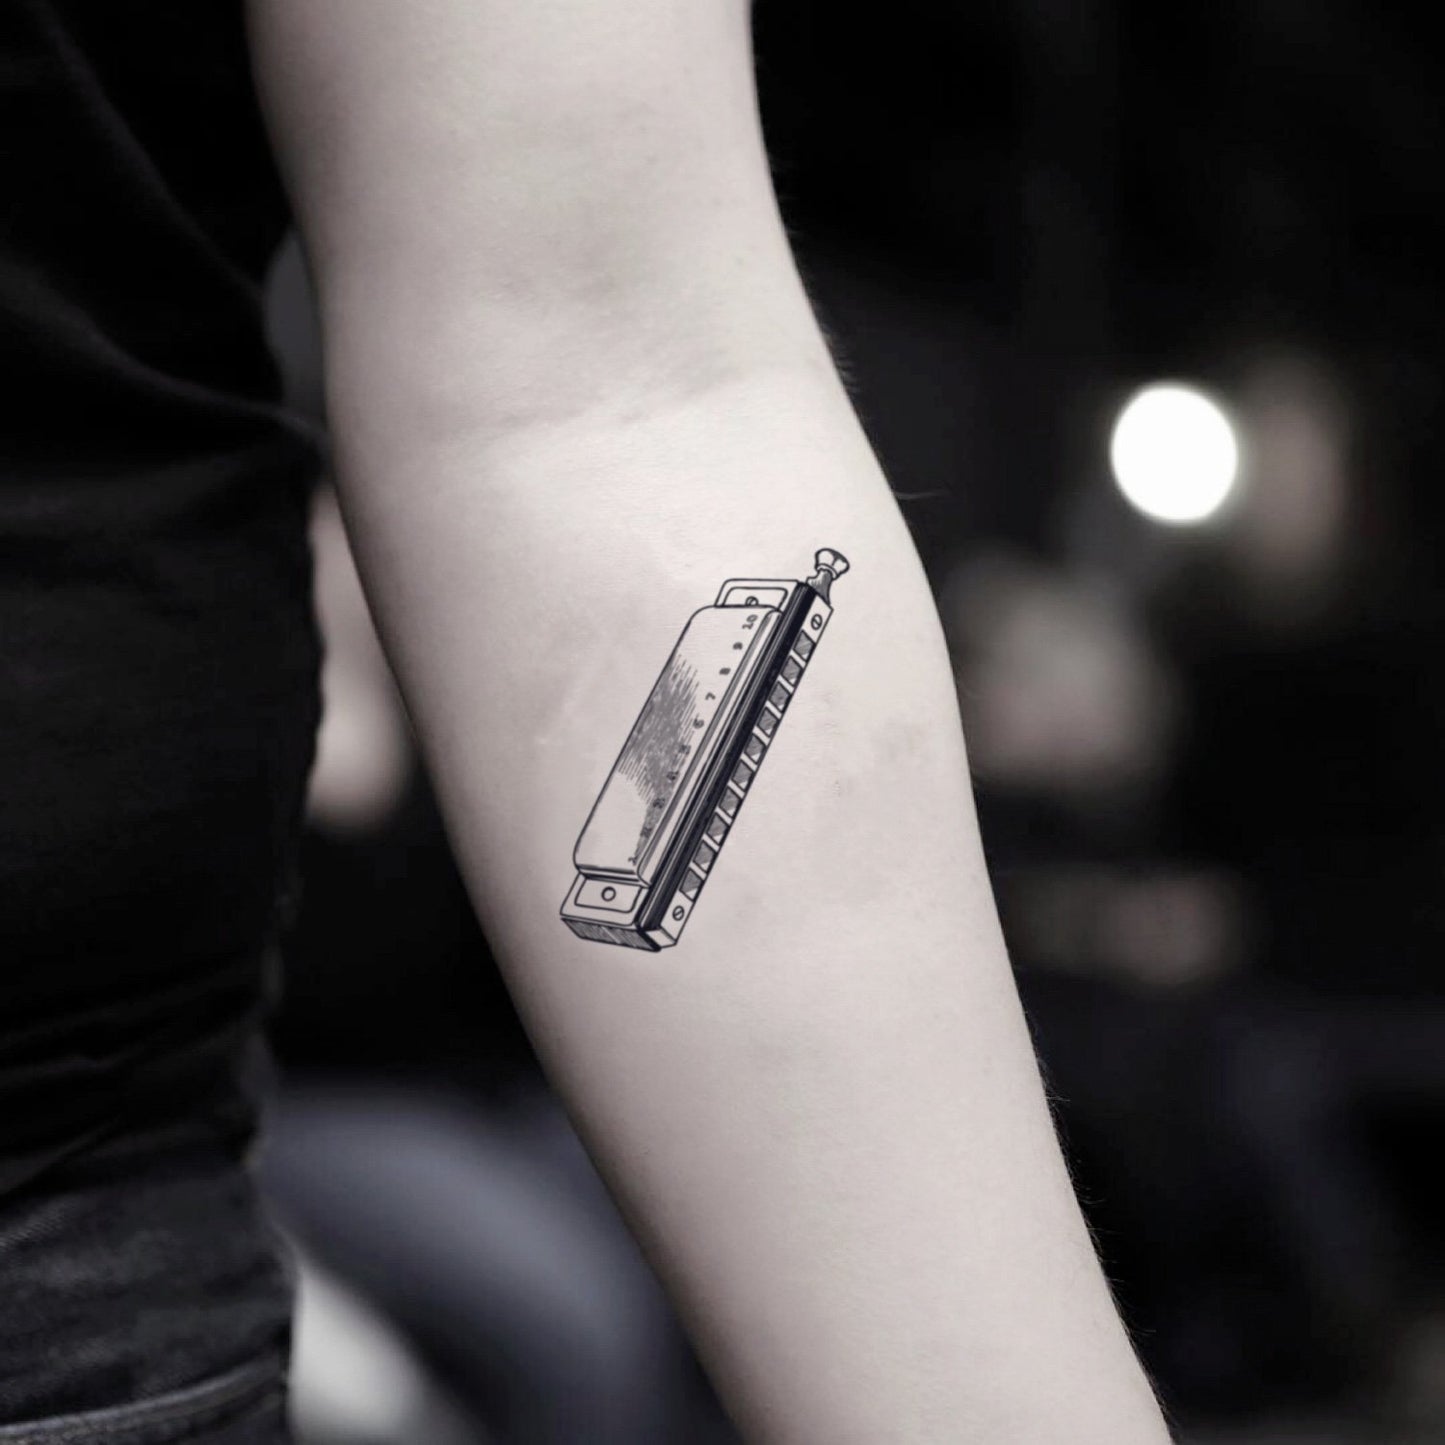 fake small harmonica music temporary tattoo sticker design idea on inner arm